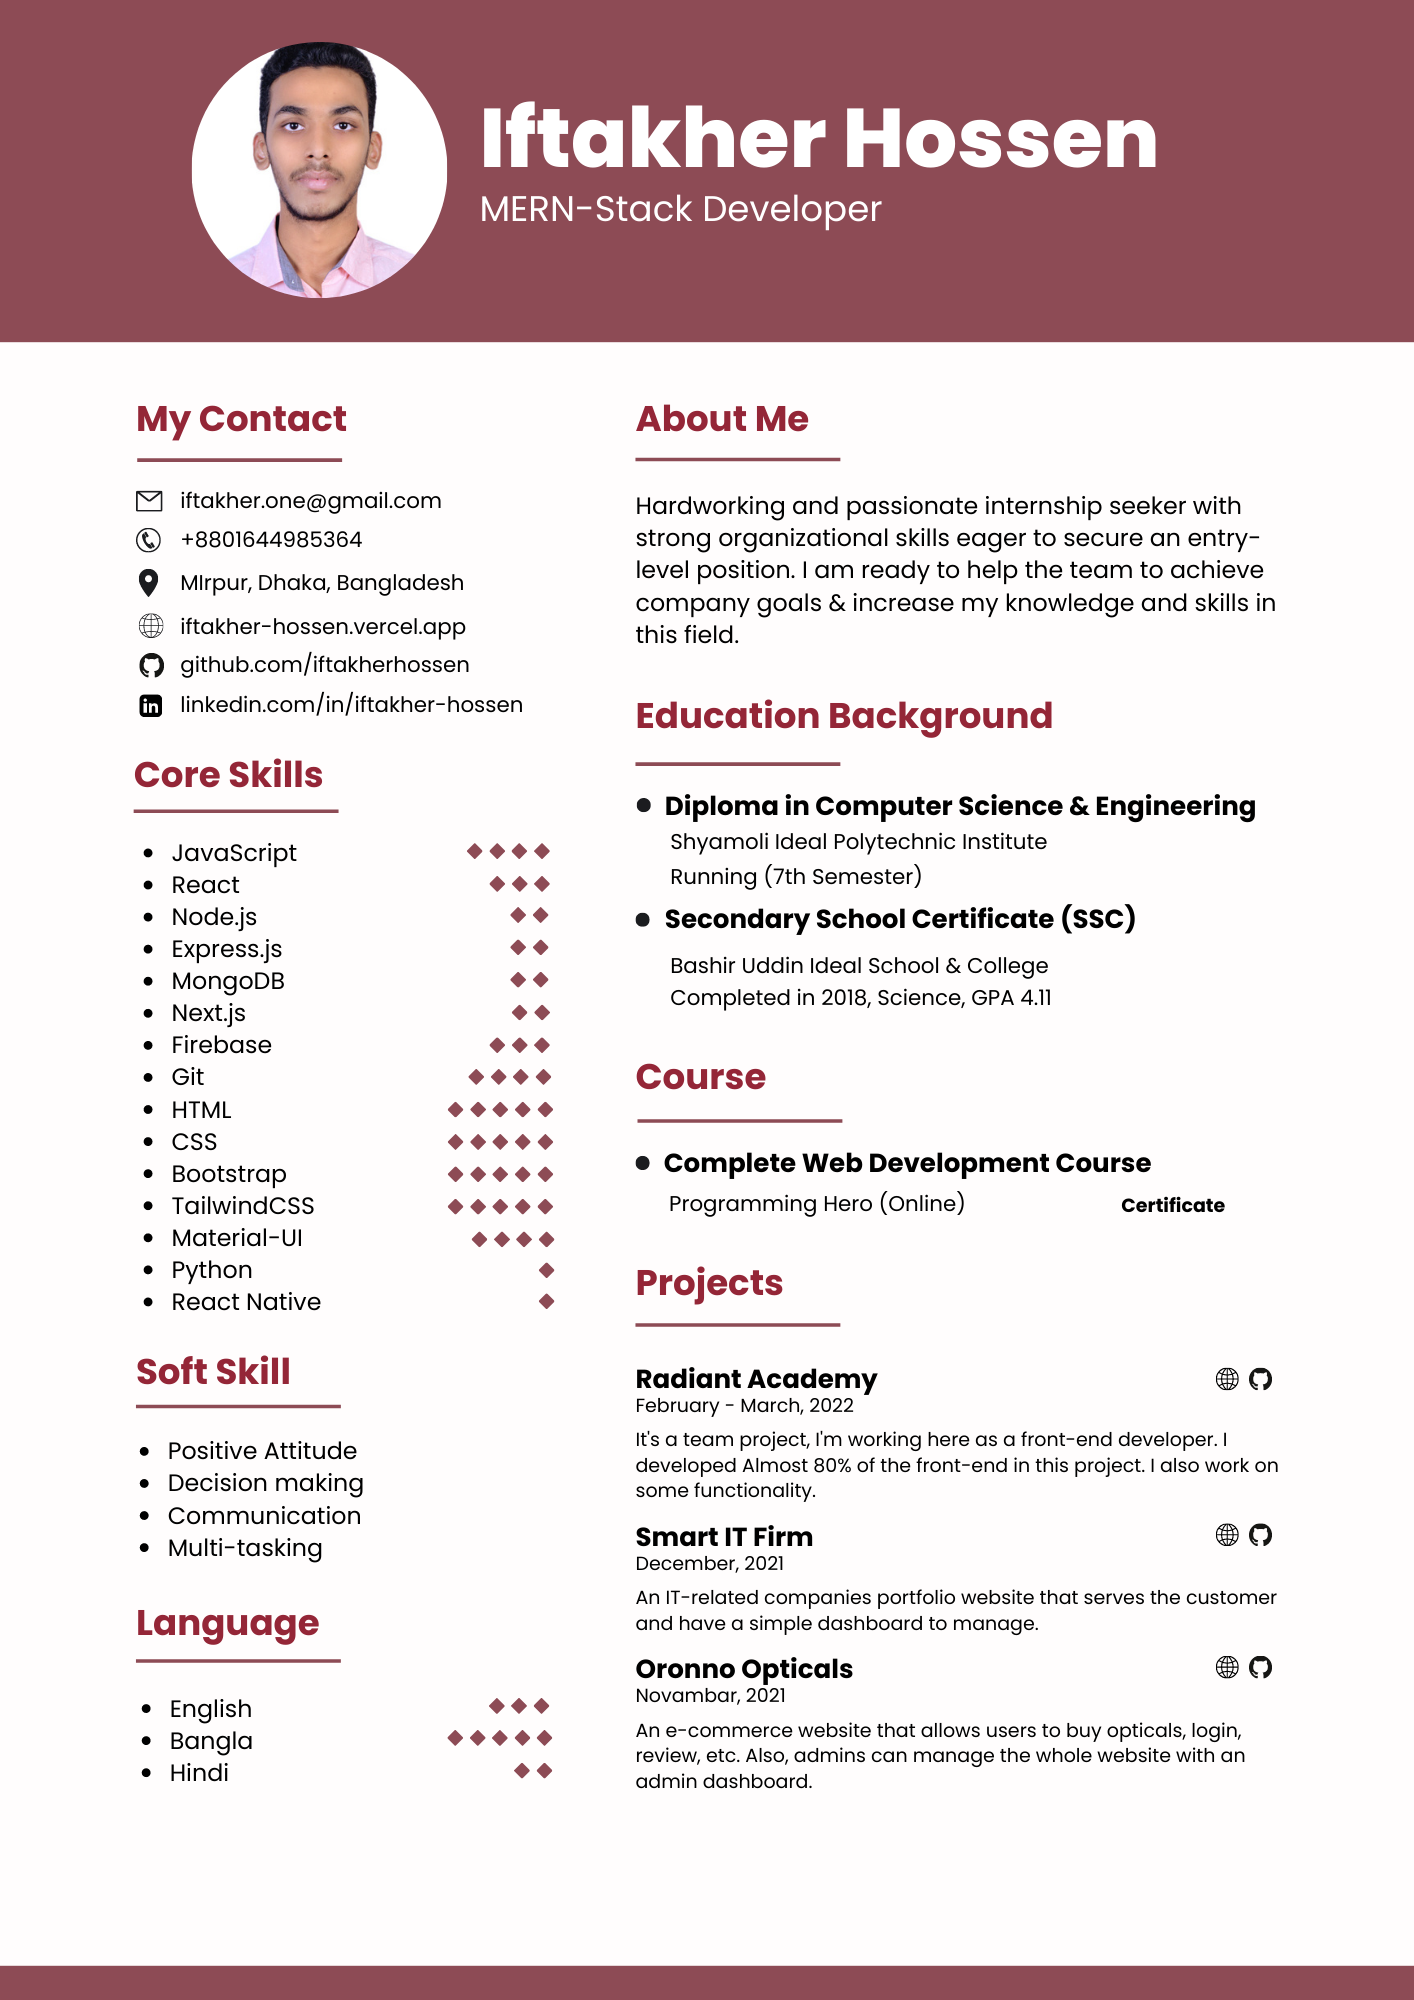 Resume in Image Format